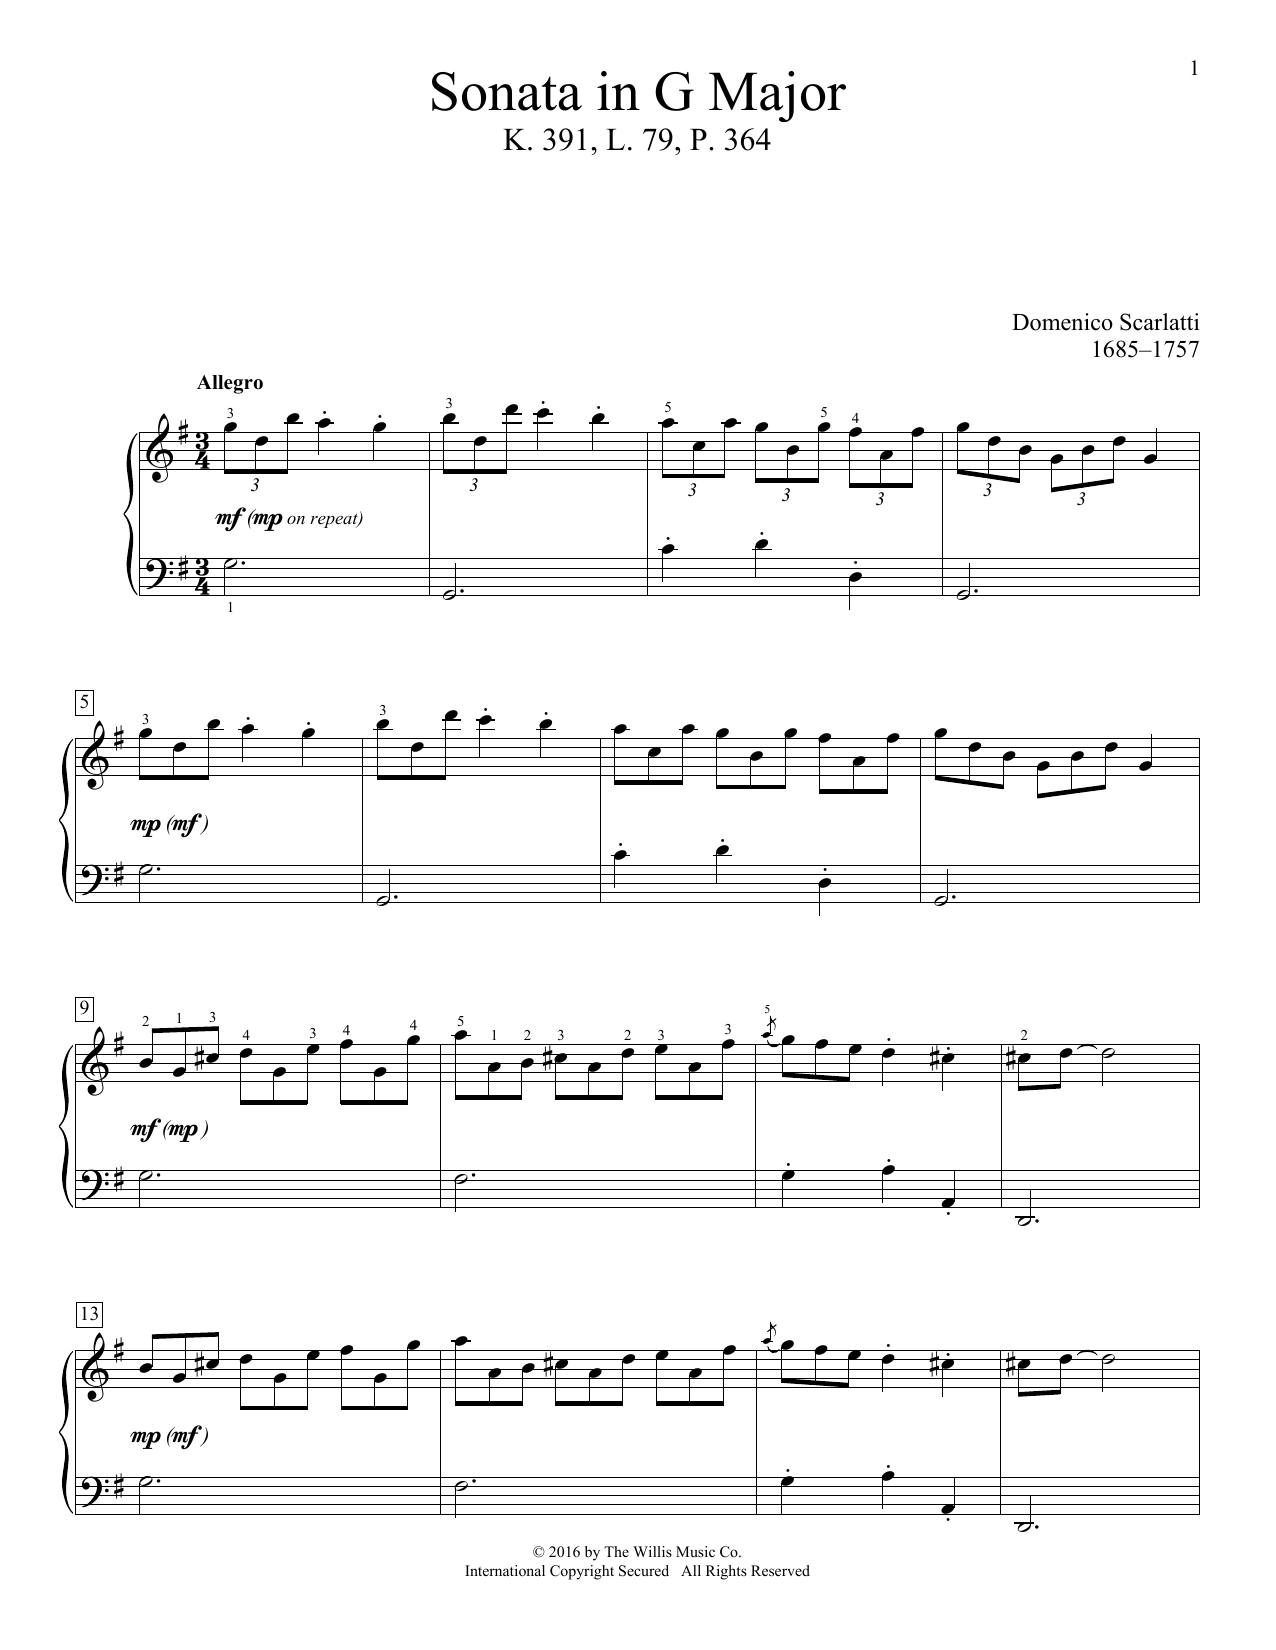 Domenico Scarlatti Sonata In G Major, K. 391, L. 79, P. 364 sheet music notes and chords arranged for Educational Piano